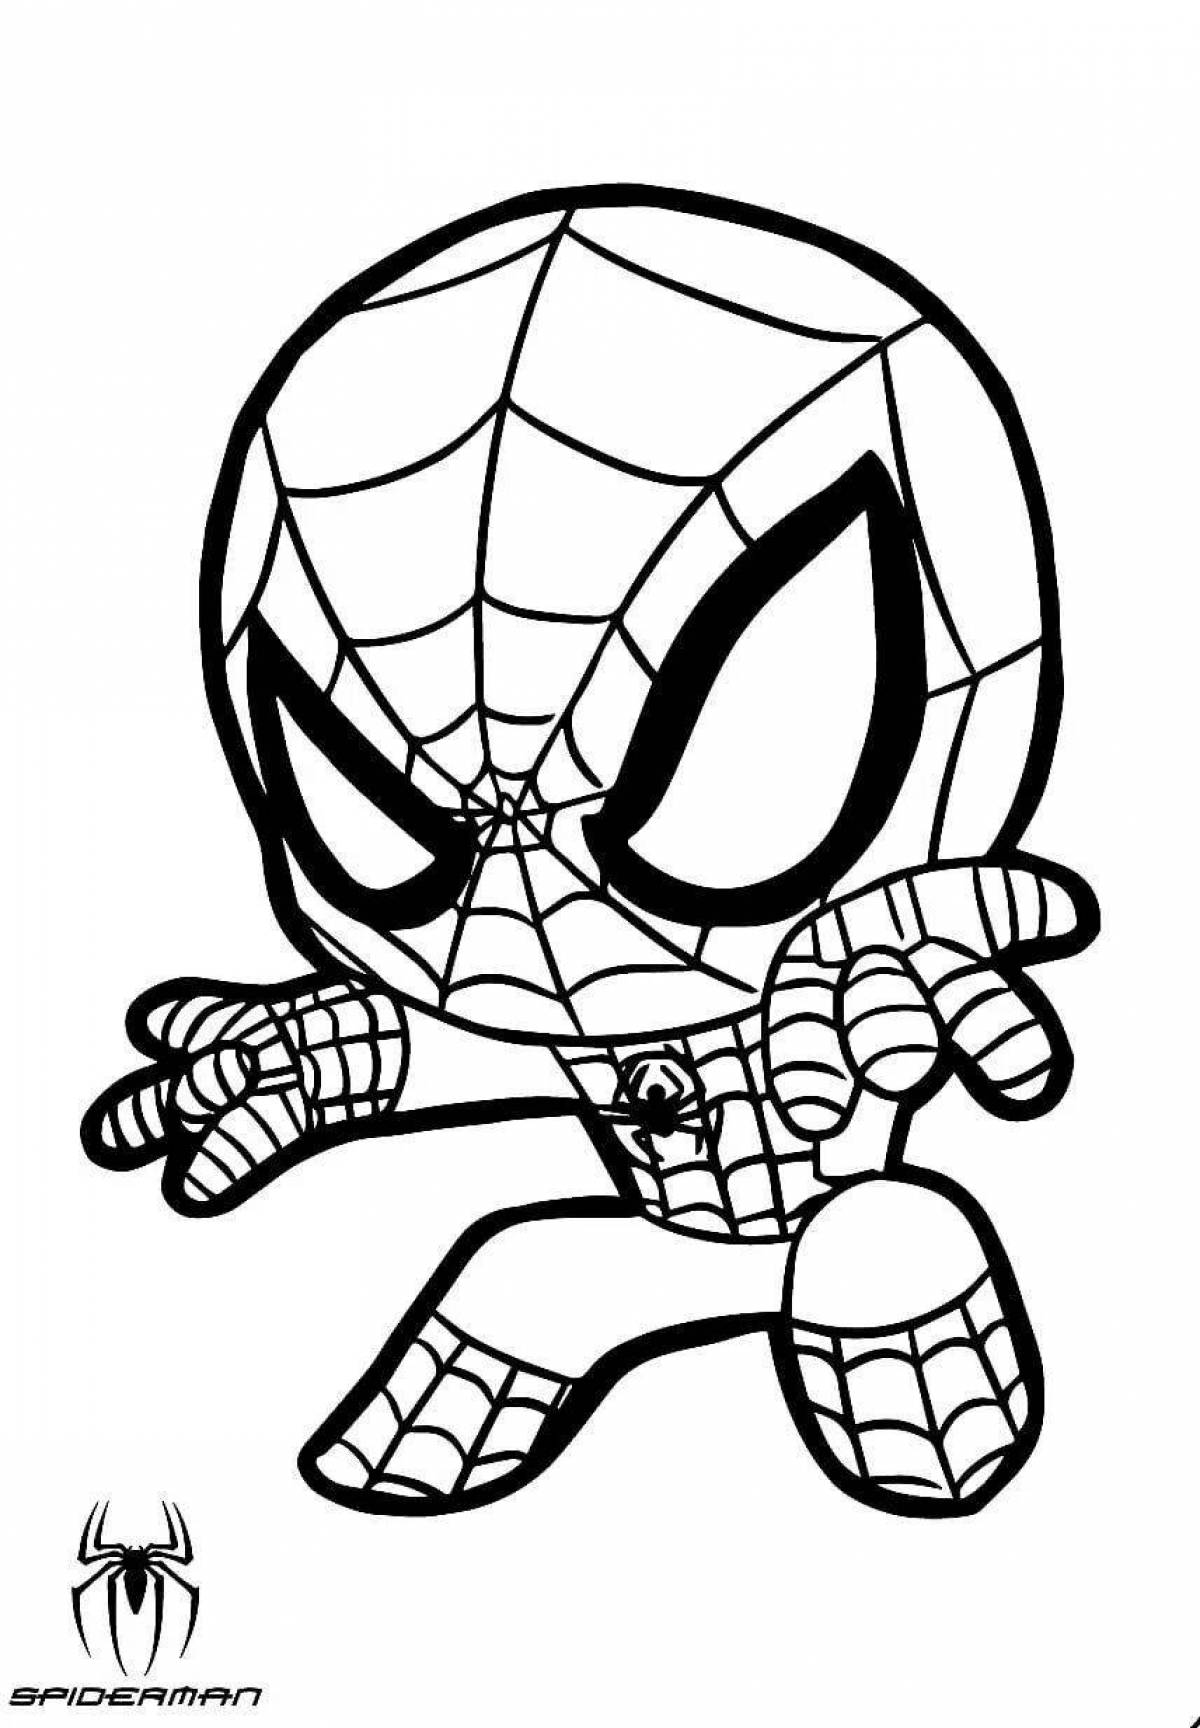 Coloring page joyful spider-man